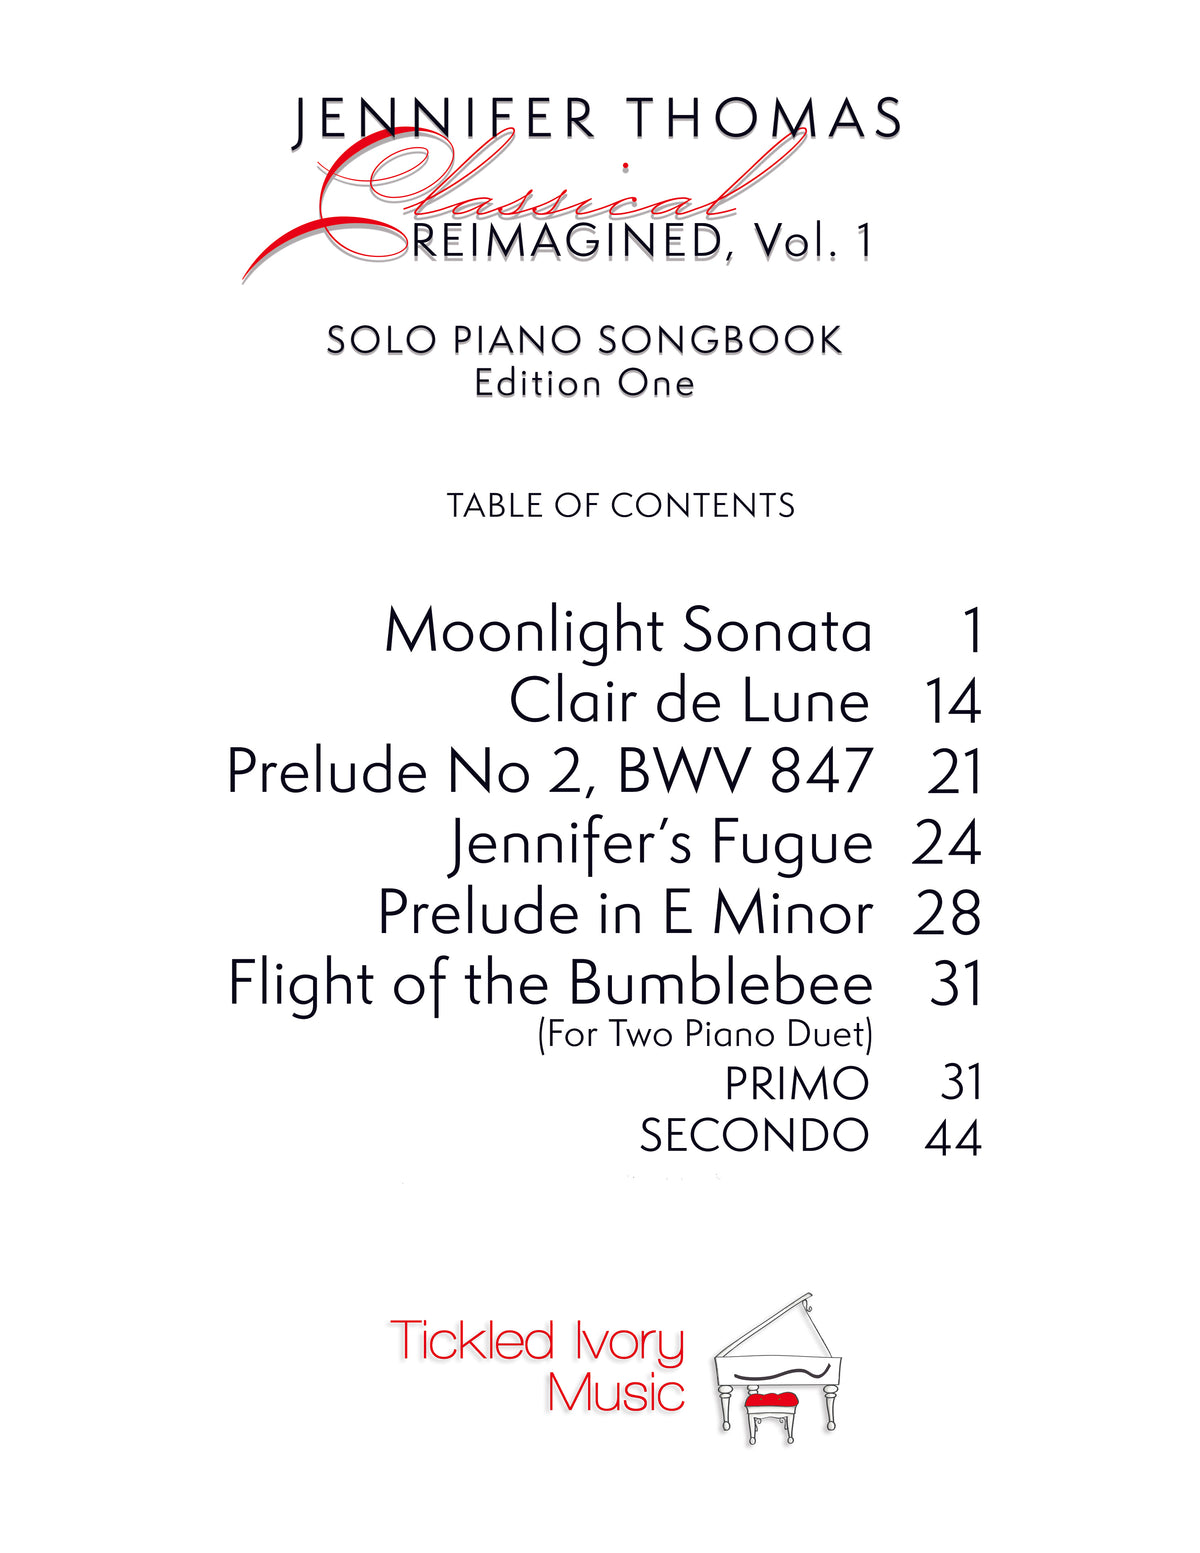 Classical Reimagined, Vol. 1 Solo Piano Digital Songbook